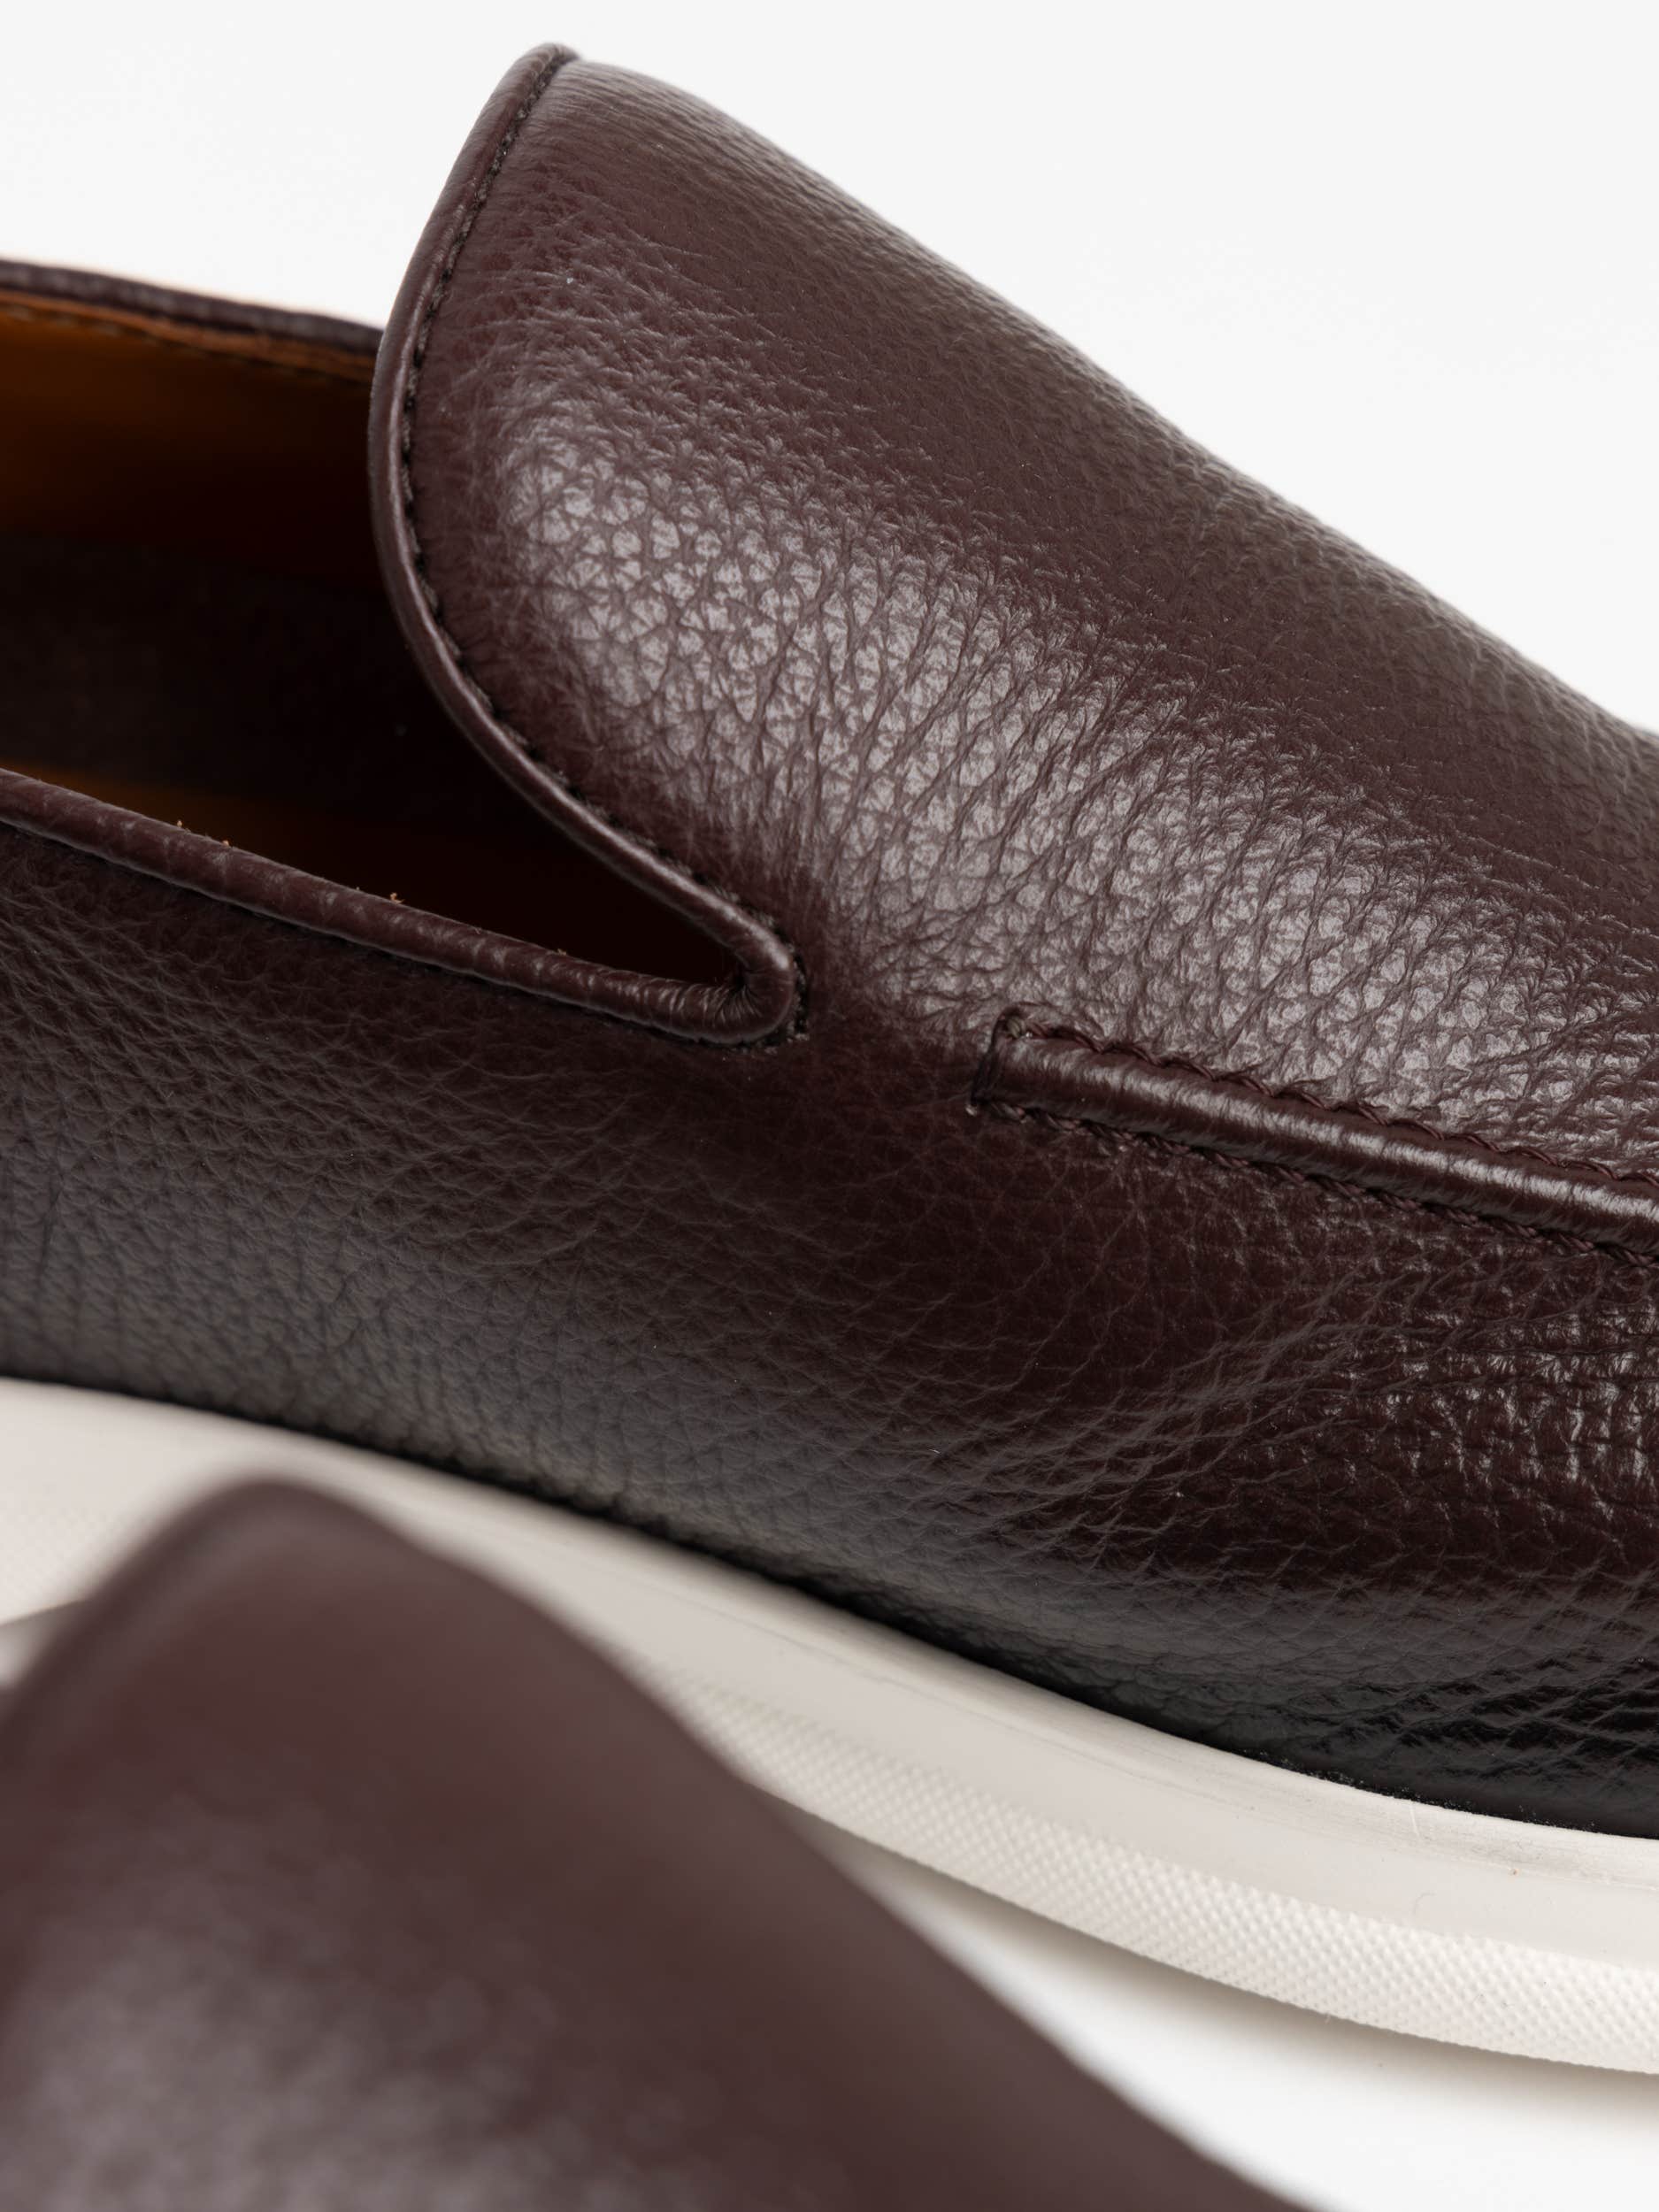 Brown Slip-On Loafer Sneakers